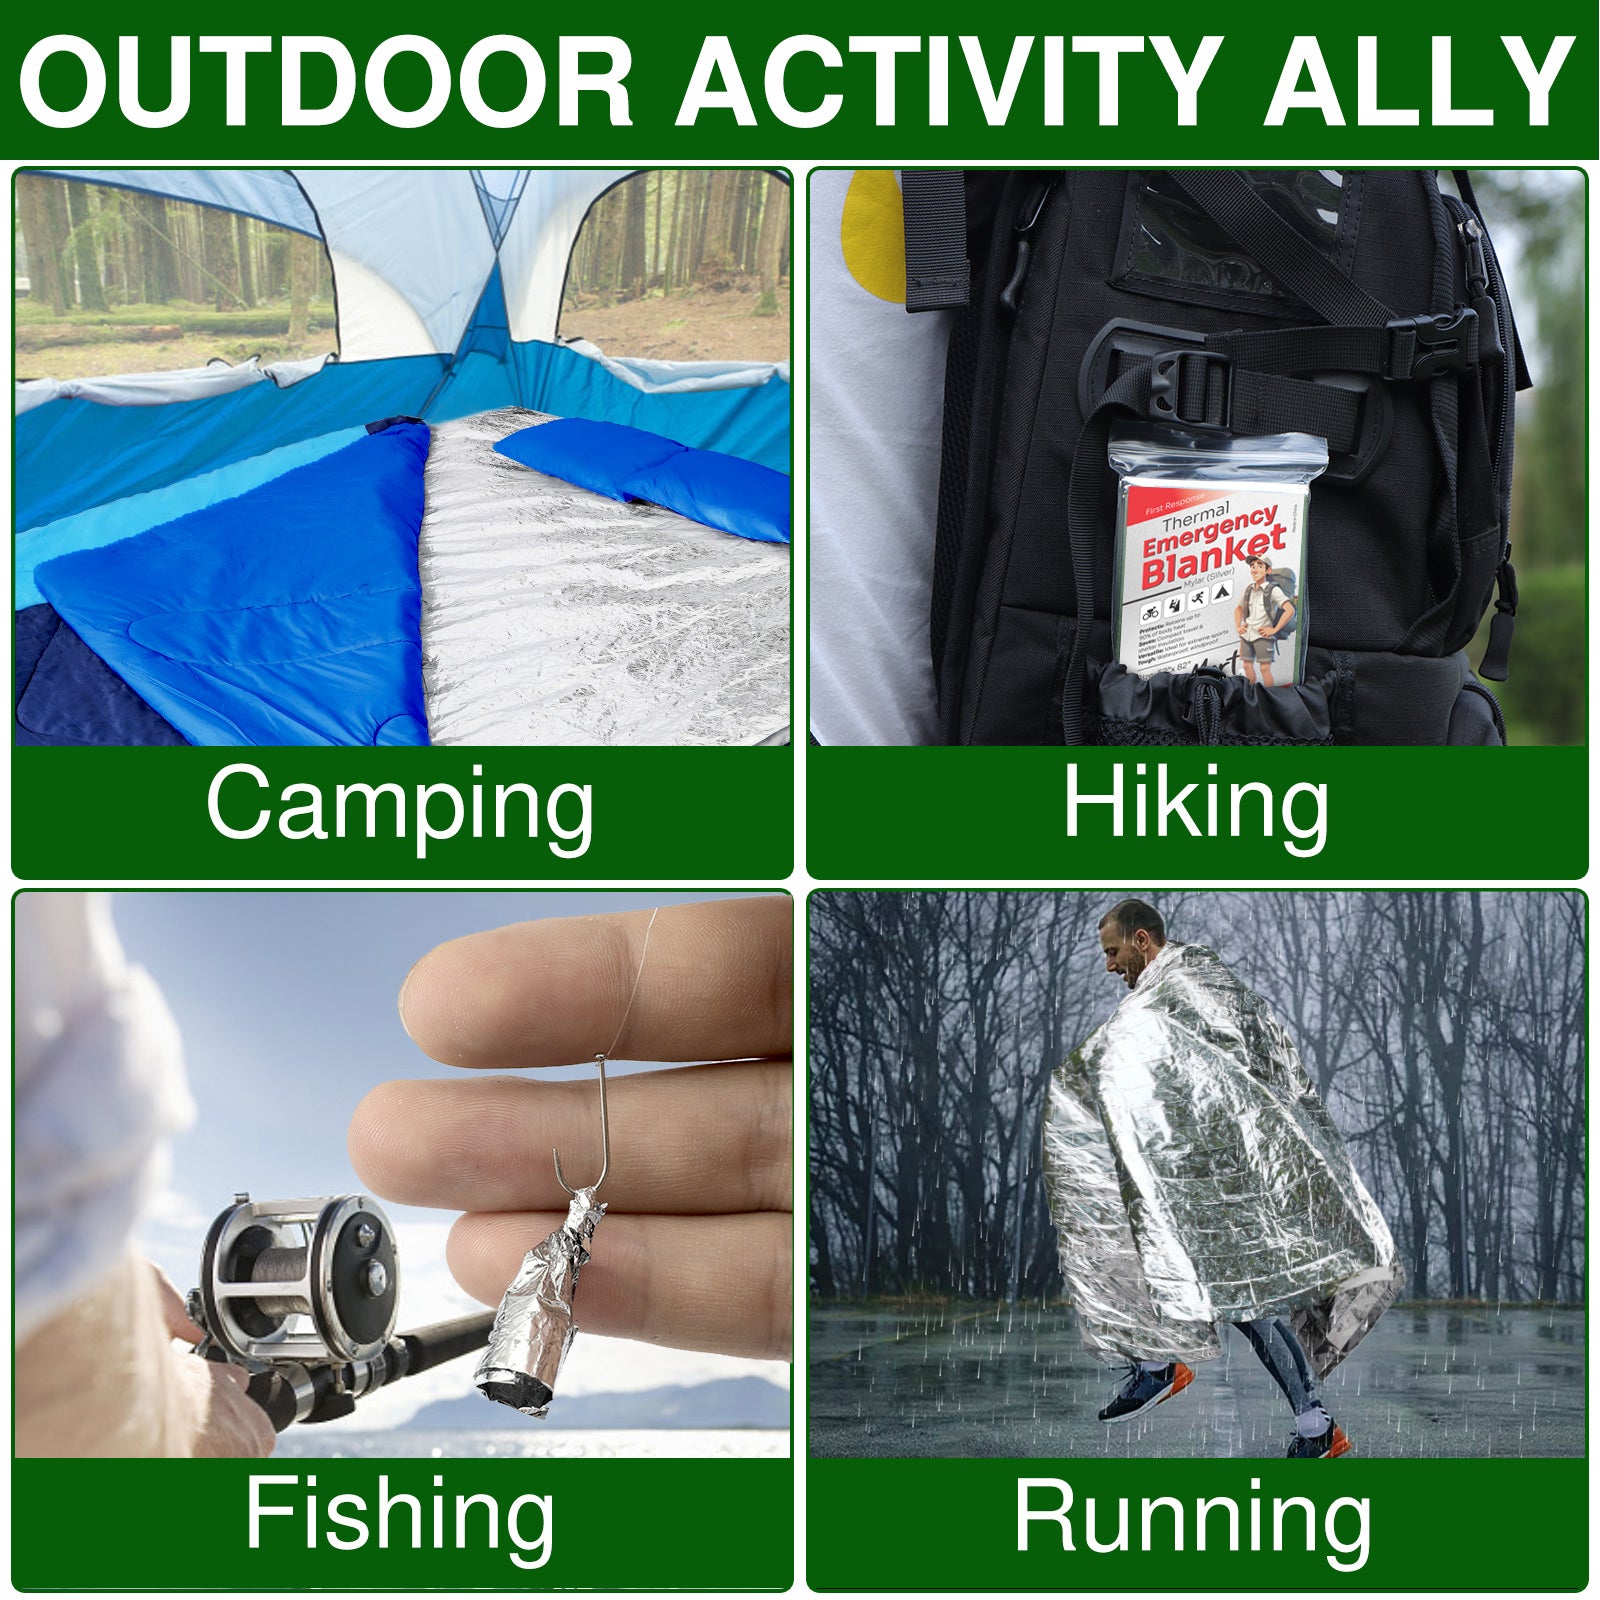 Outdoor Activity Ally: Emergency blanket